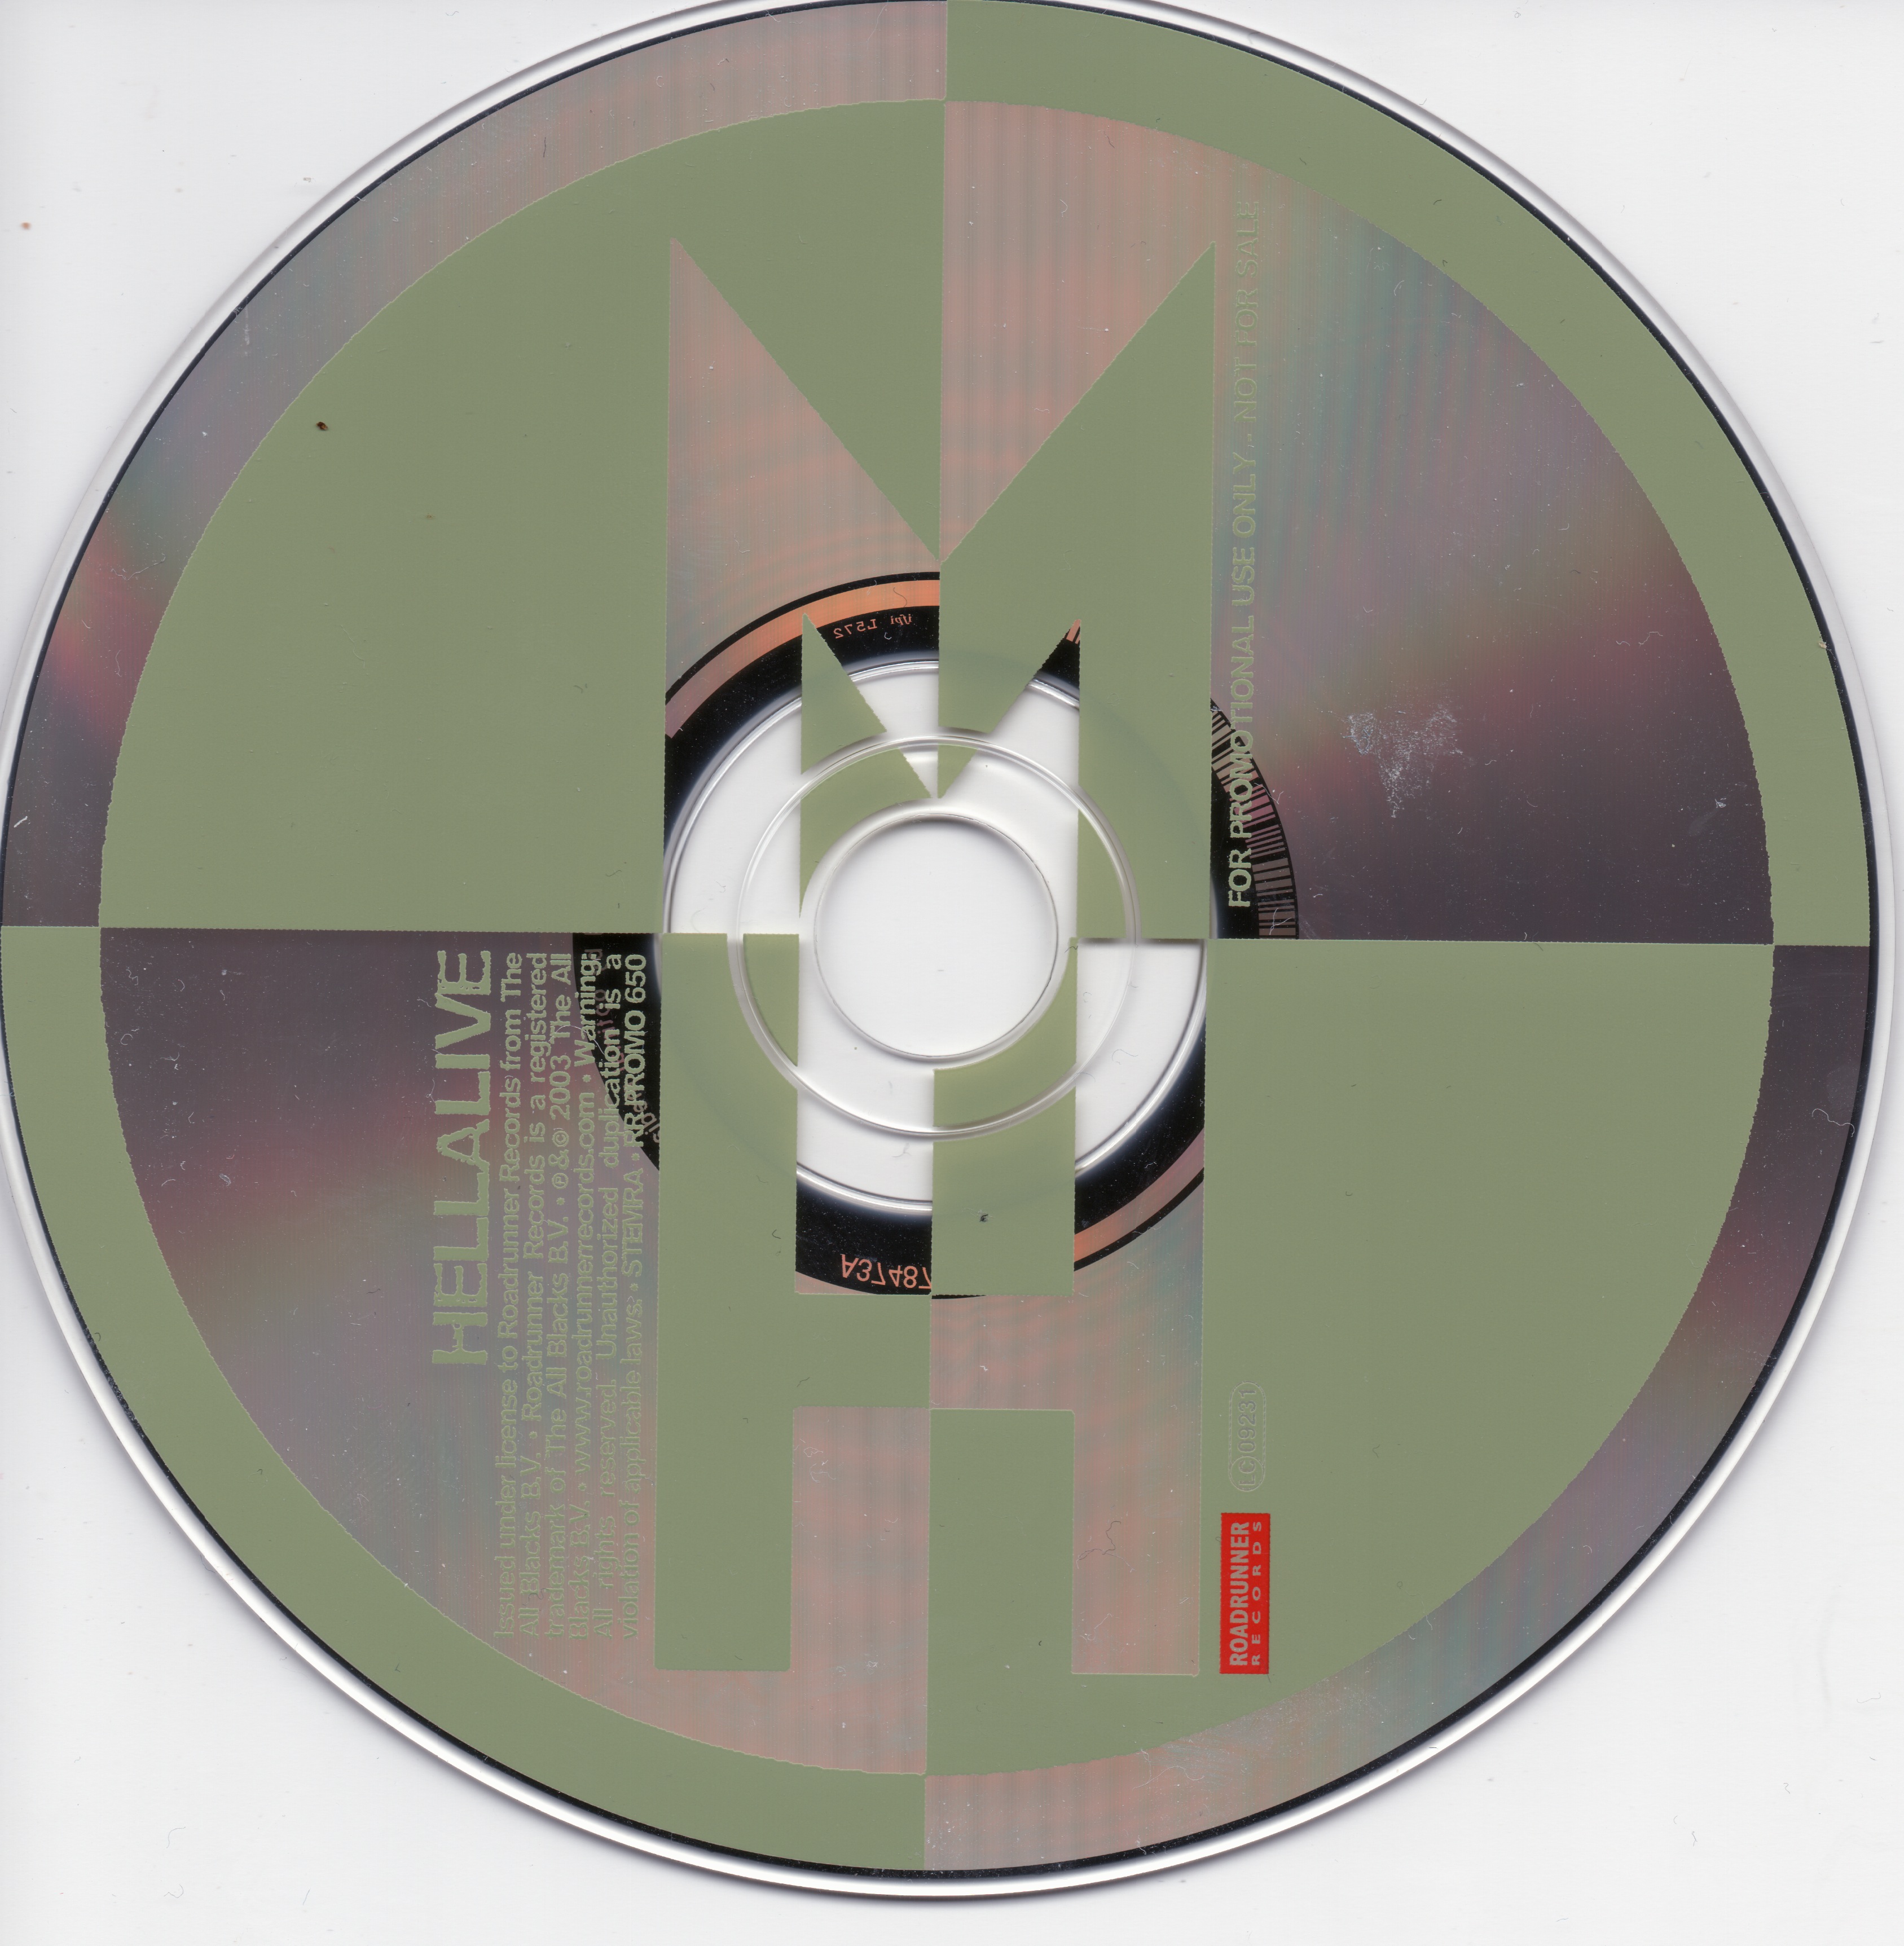 Hellalive Card Sleeve Promo disc